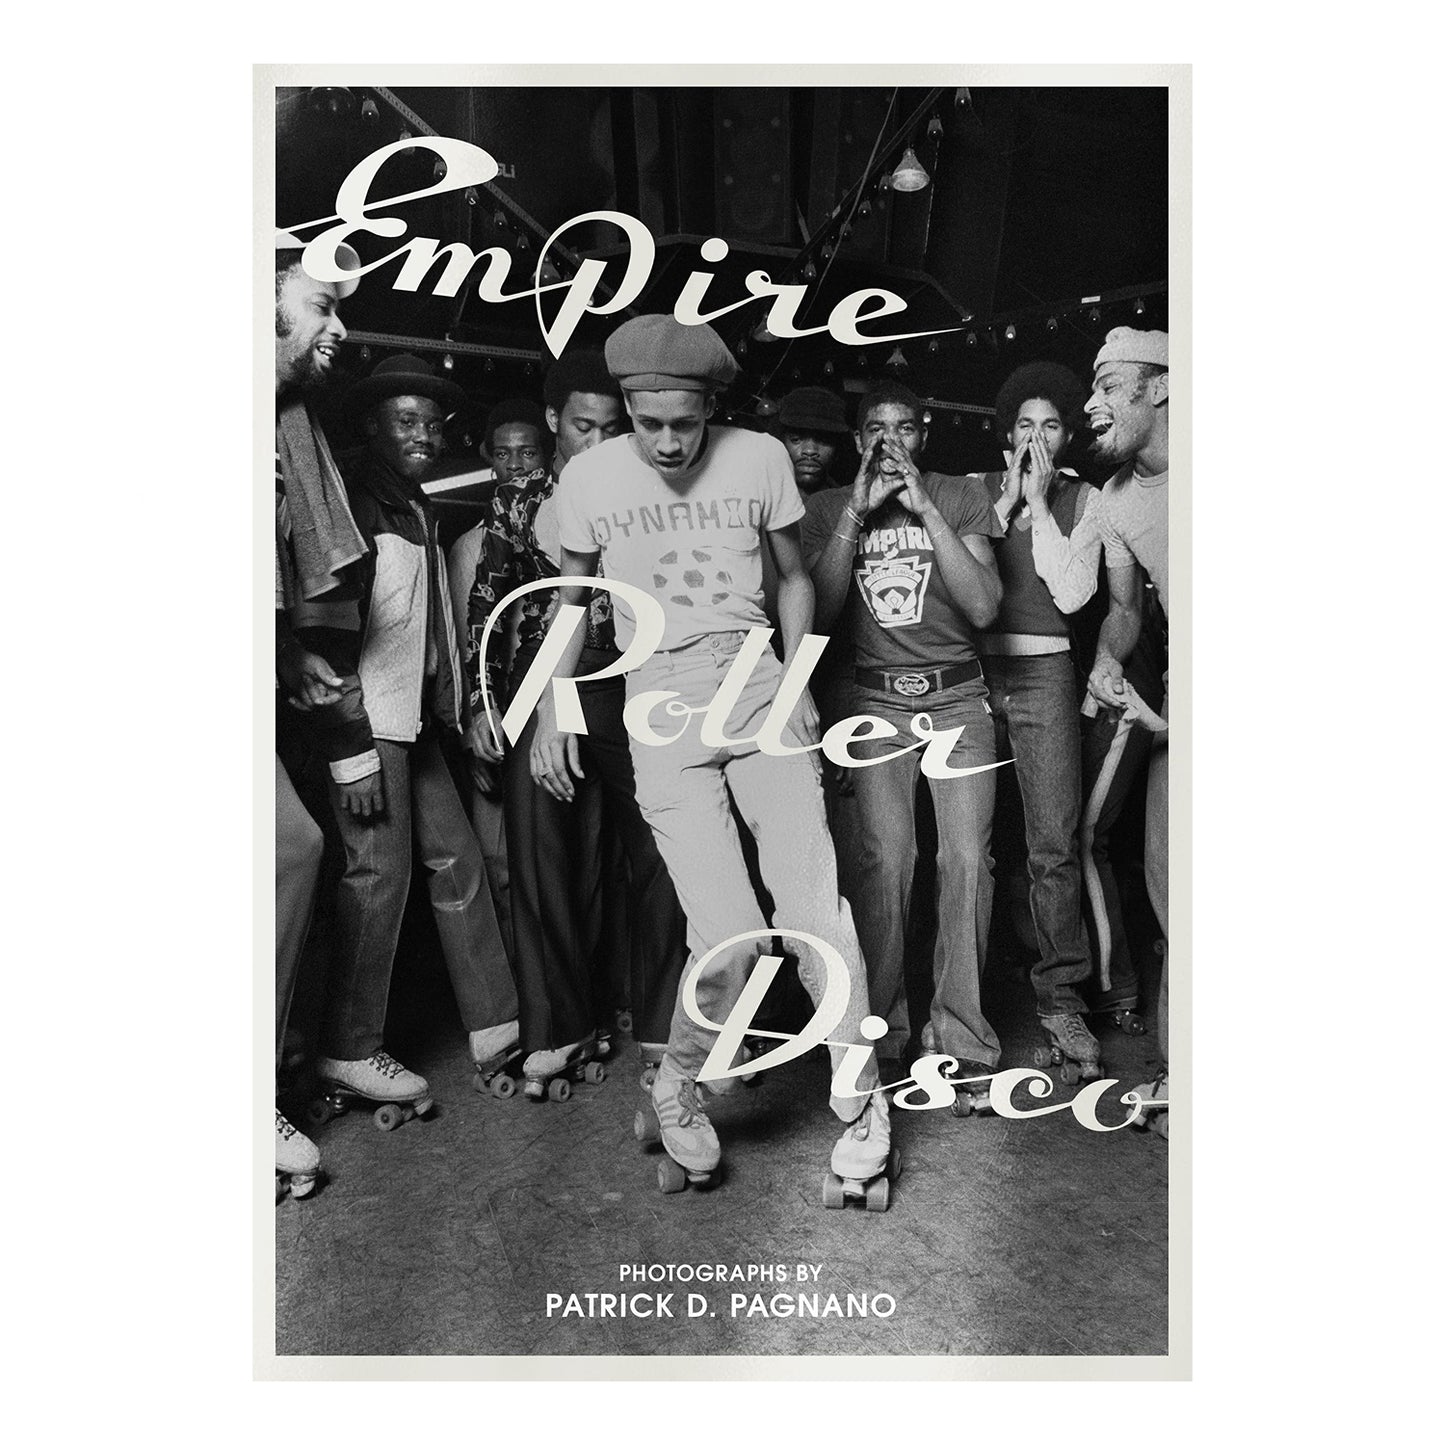 Empire Roller Disco: Photographs Photo Museum Ireland